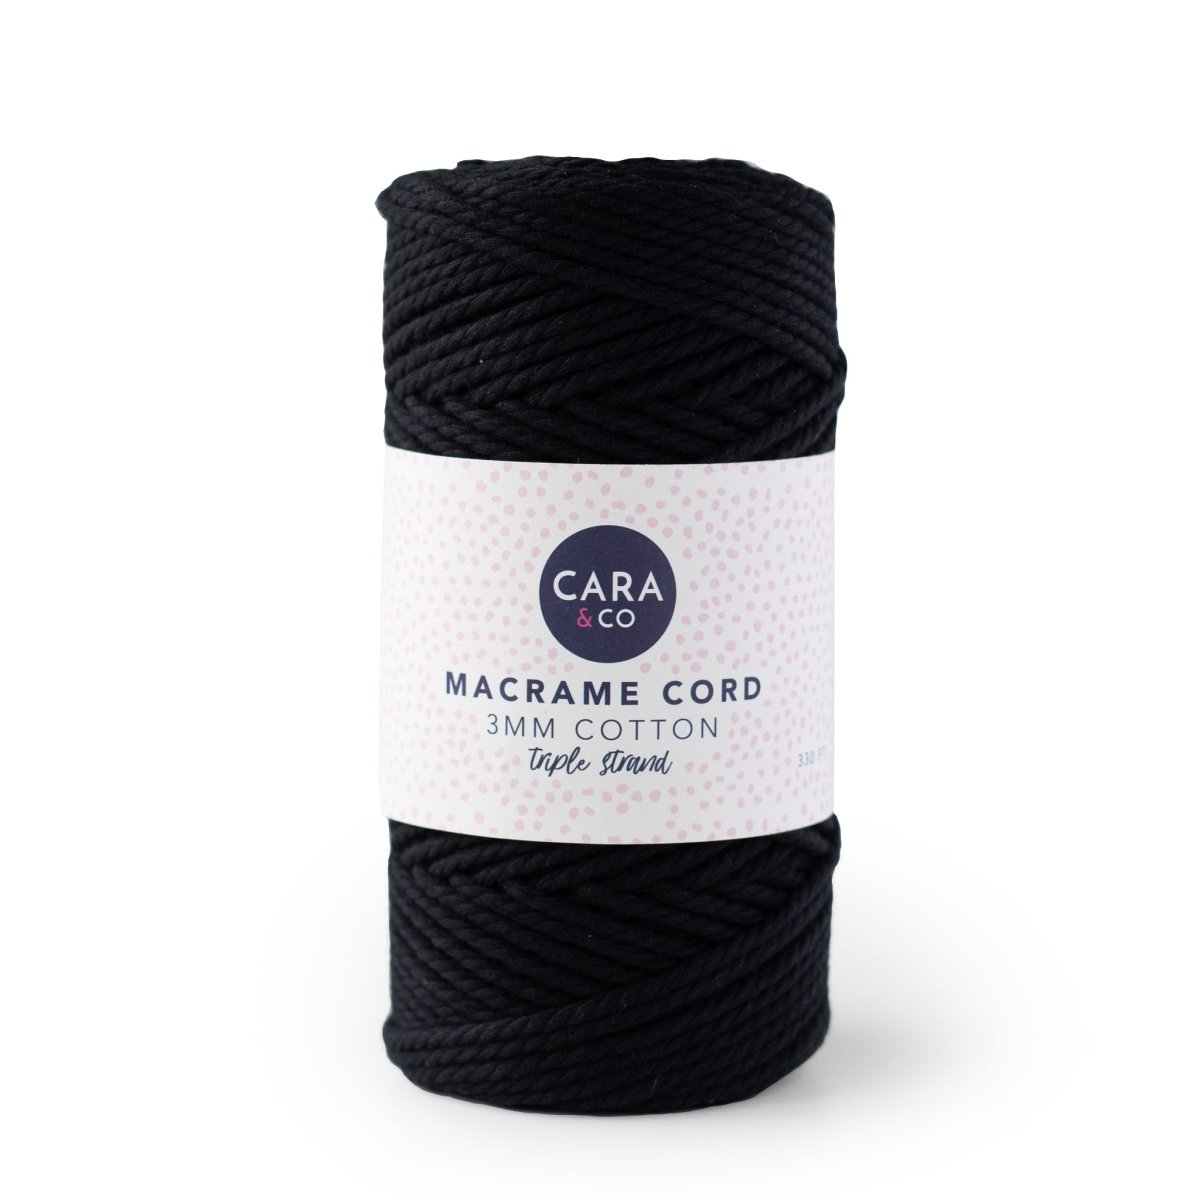 Cording Macrame Spools Midnight Black from Cara & Co Craft Supply